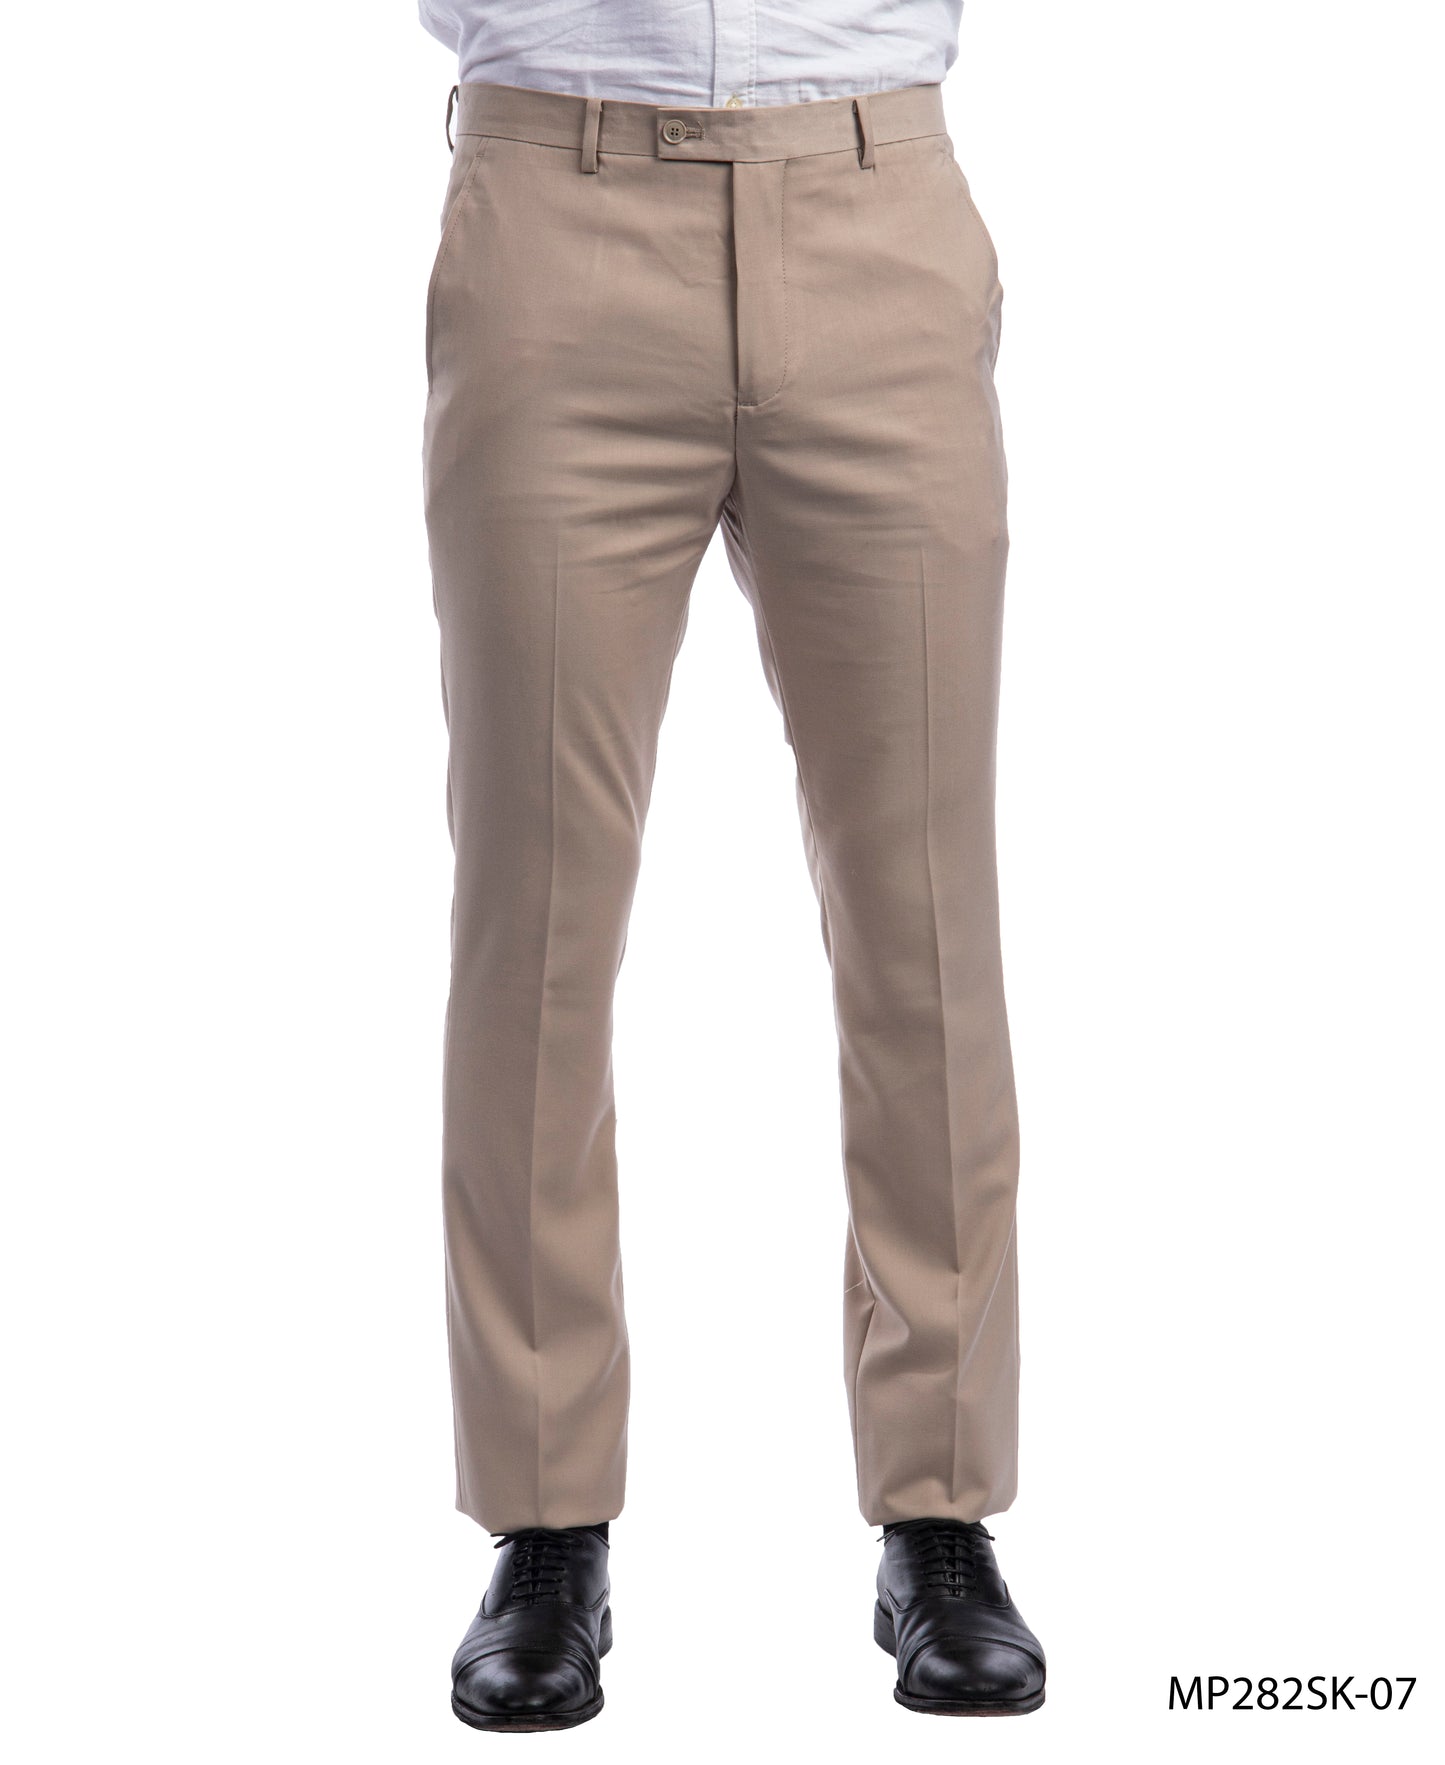 Sean Alexander Mens Mid Tan Performance Stretch Dress Pants MP282SK-07